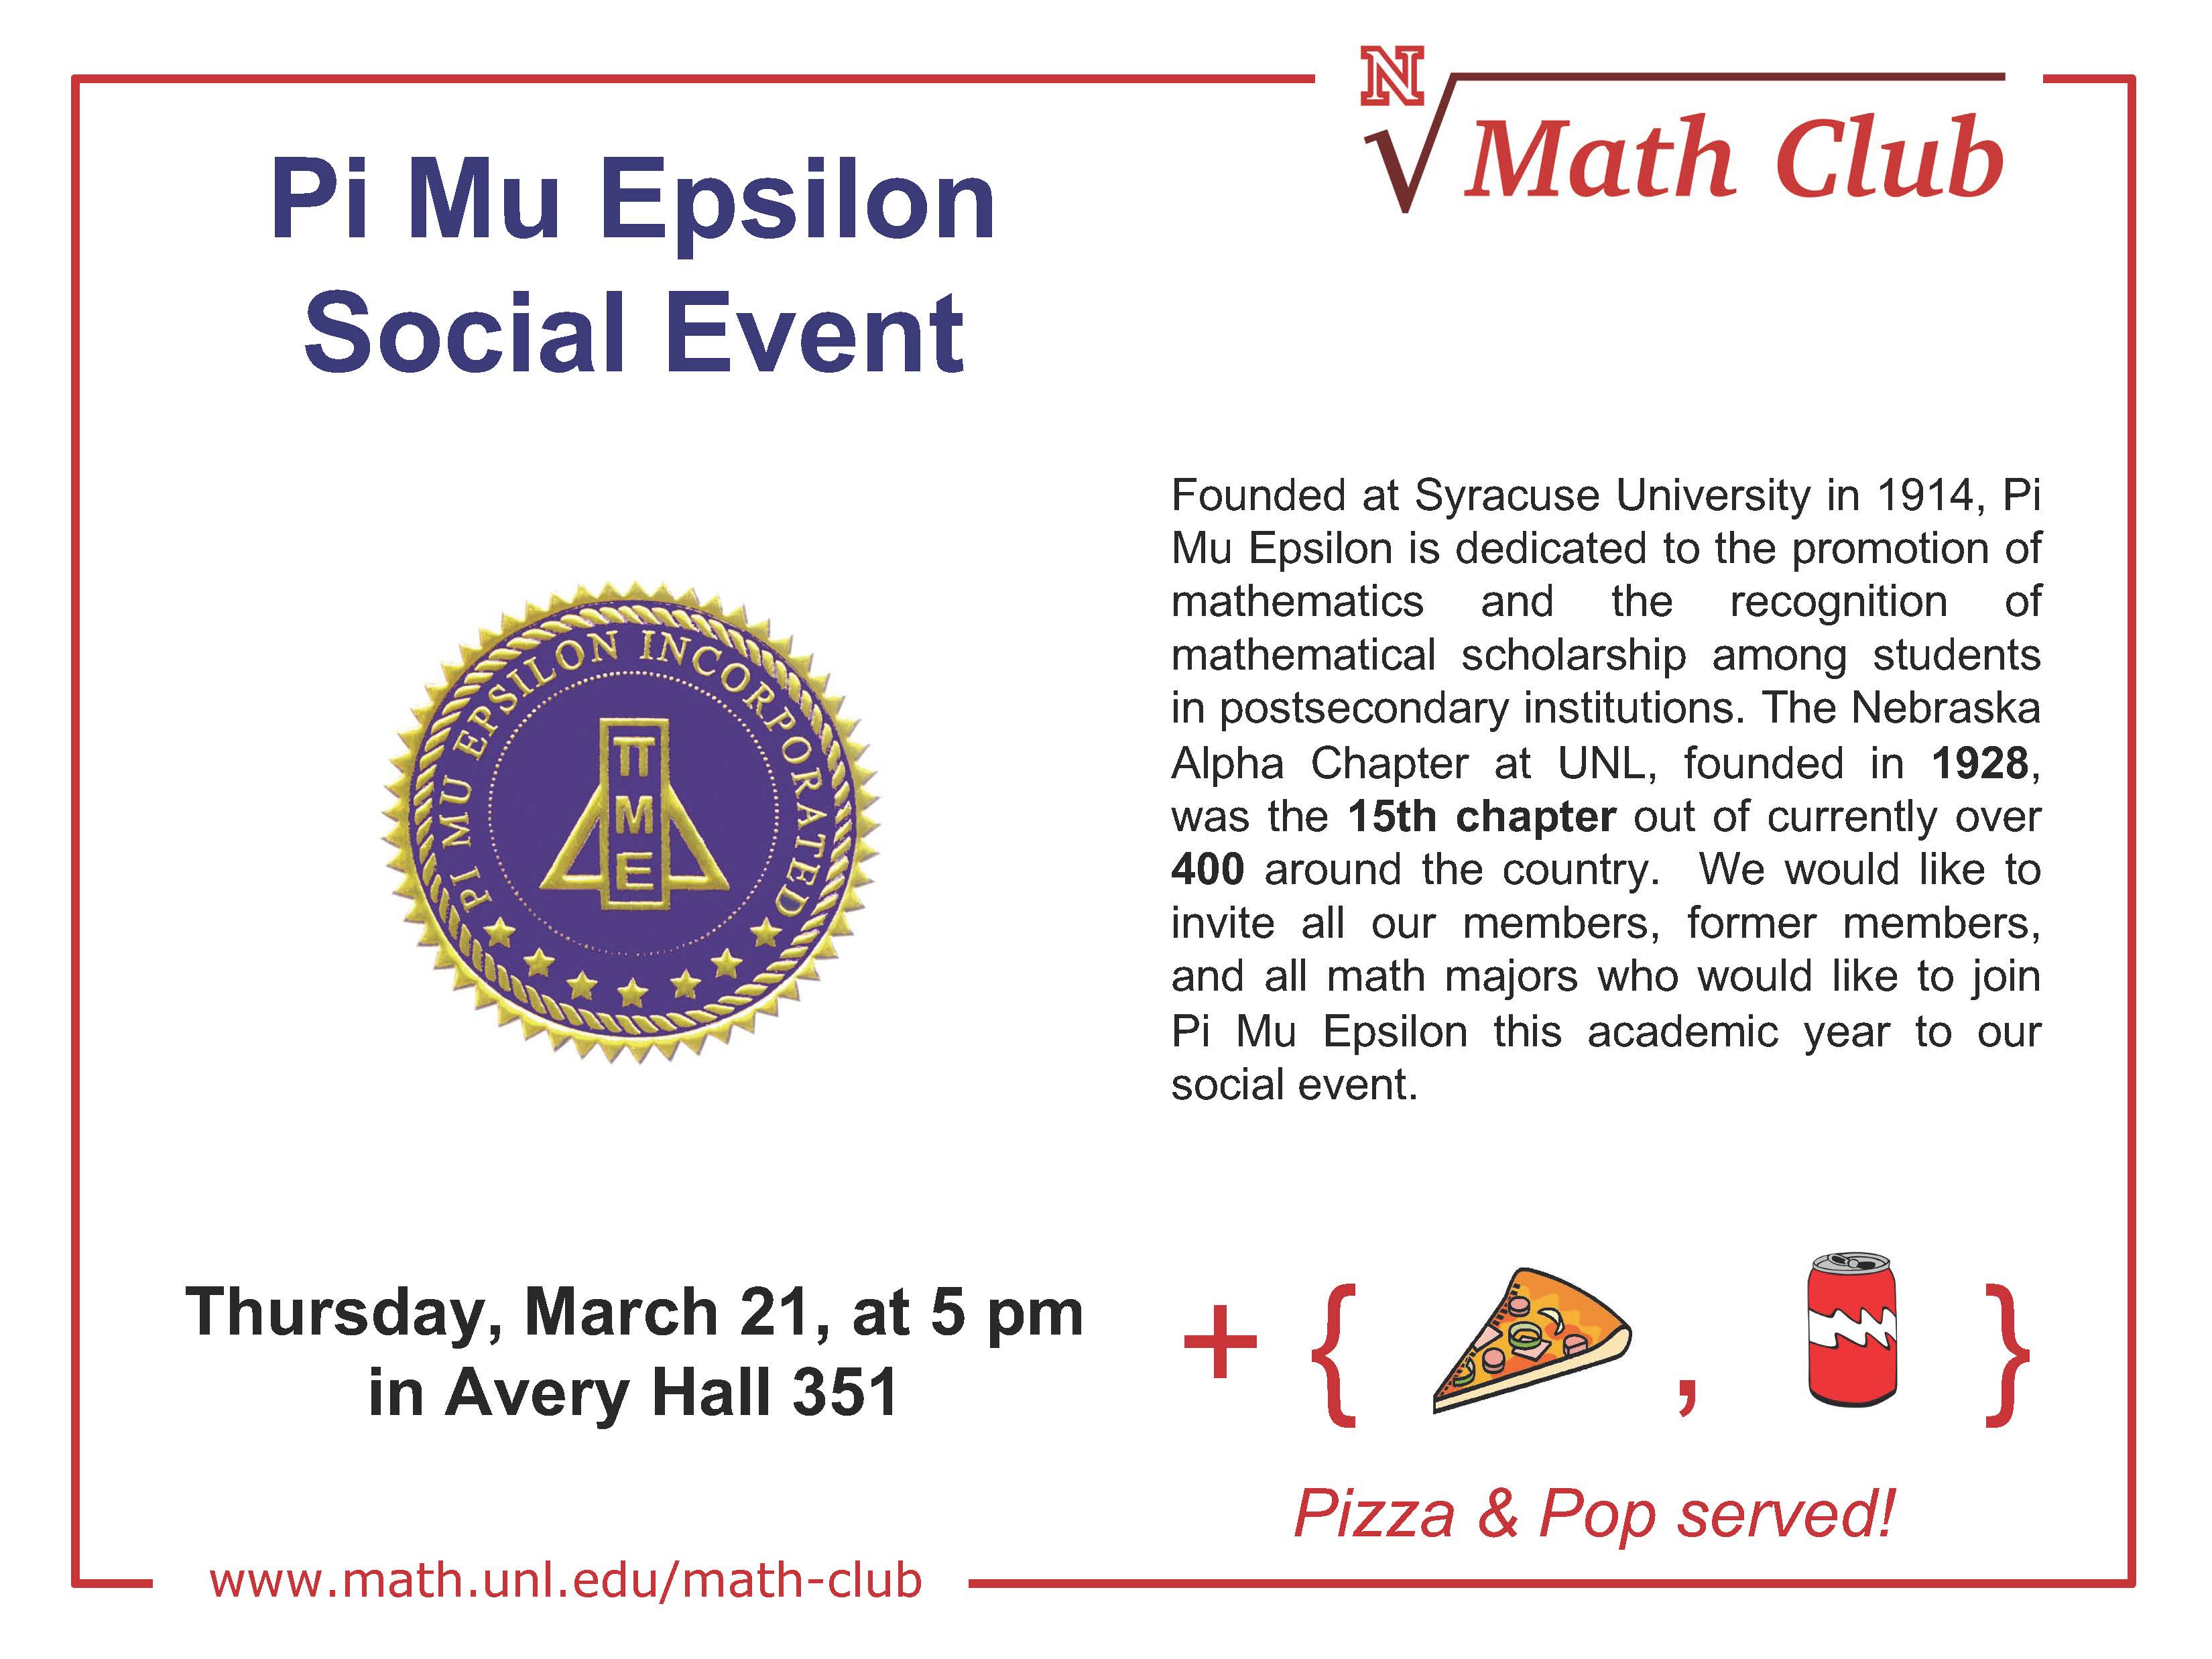 Math Club: Pi Mu Epsilon Social Event